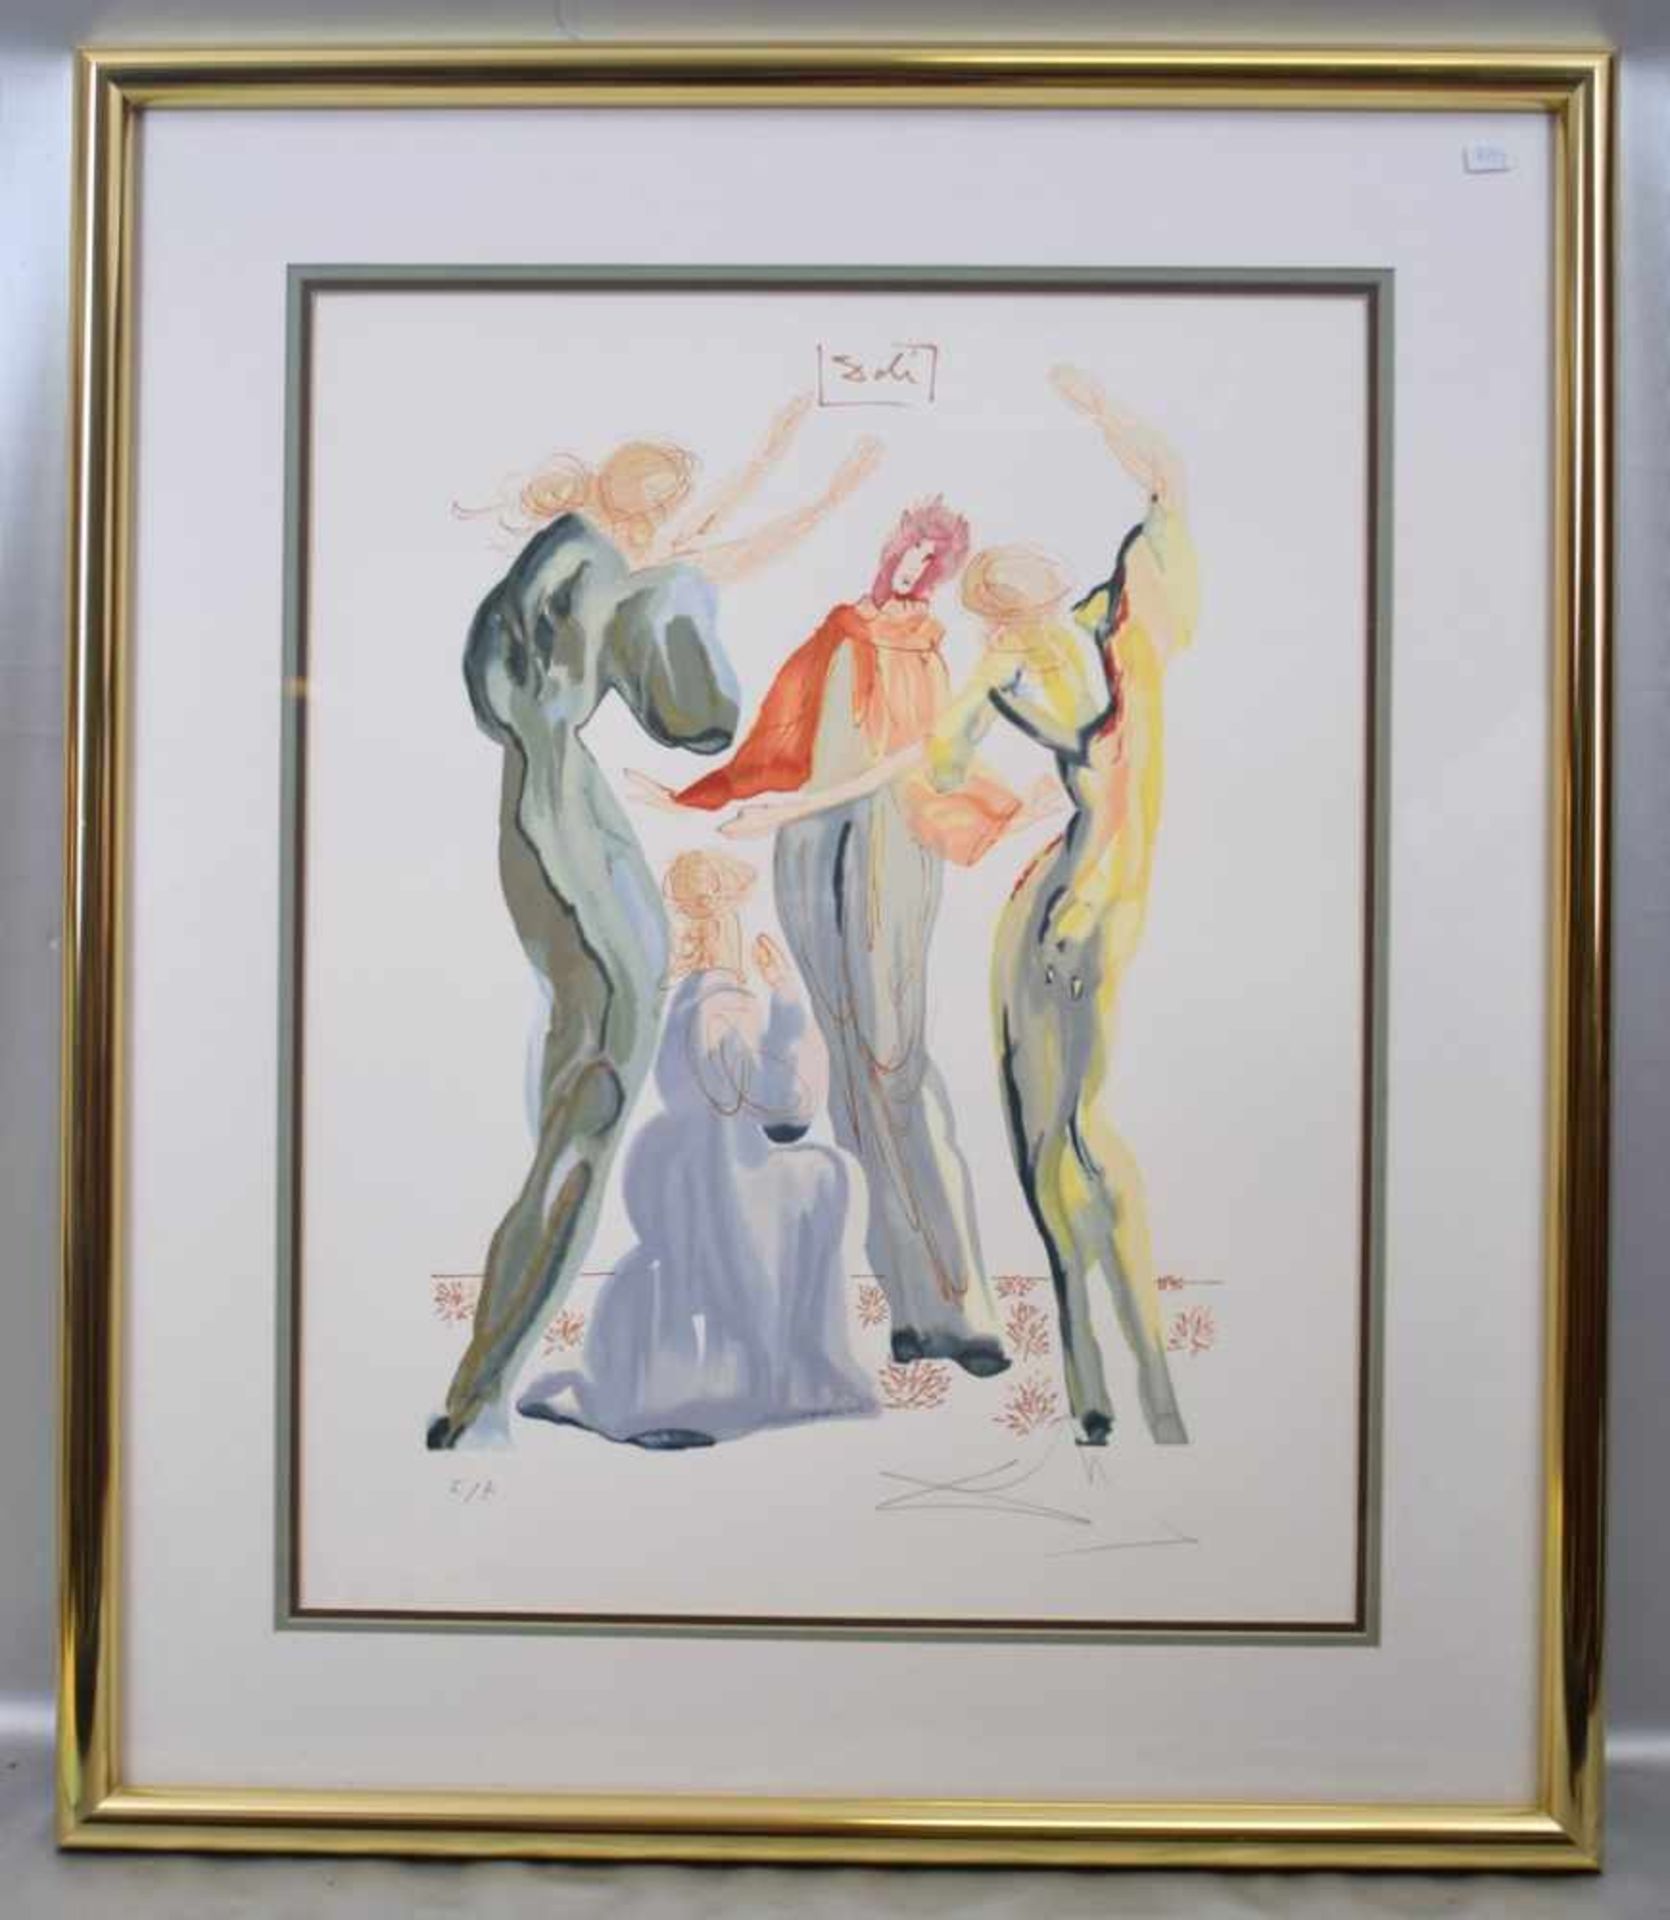 LithografieTitel: La Danse, u.l. mit Bleistift E/A, u.r.sign. Dali, rückseitiges altes Klebeschild